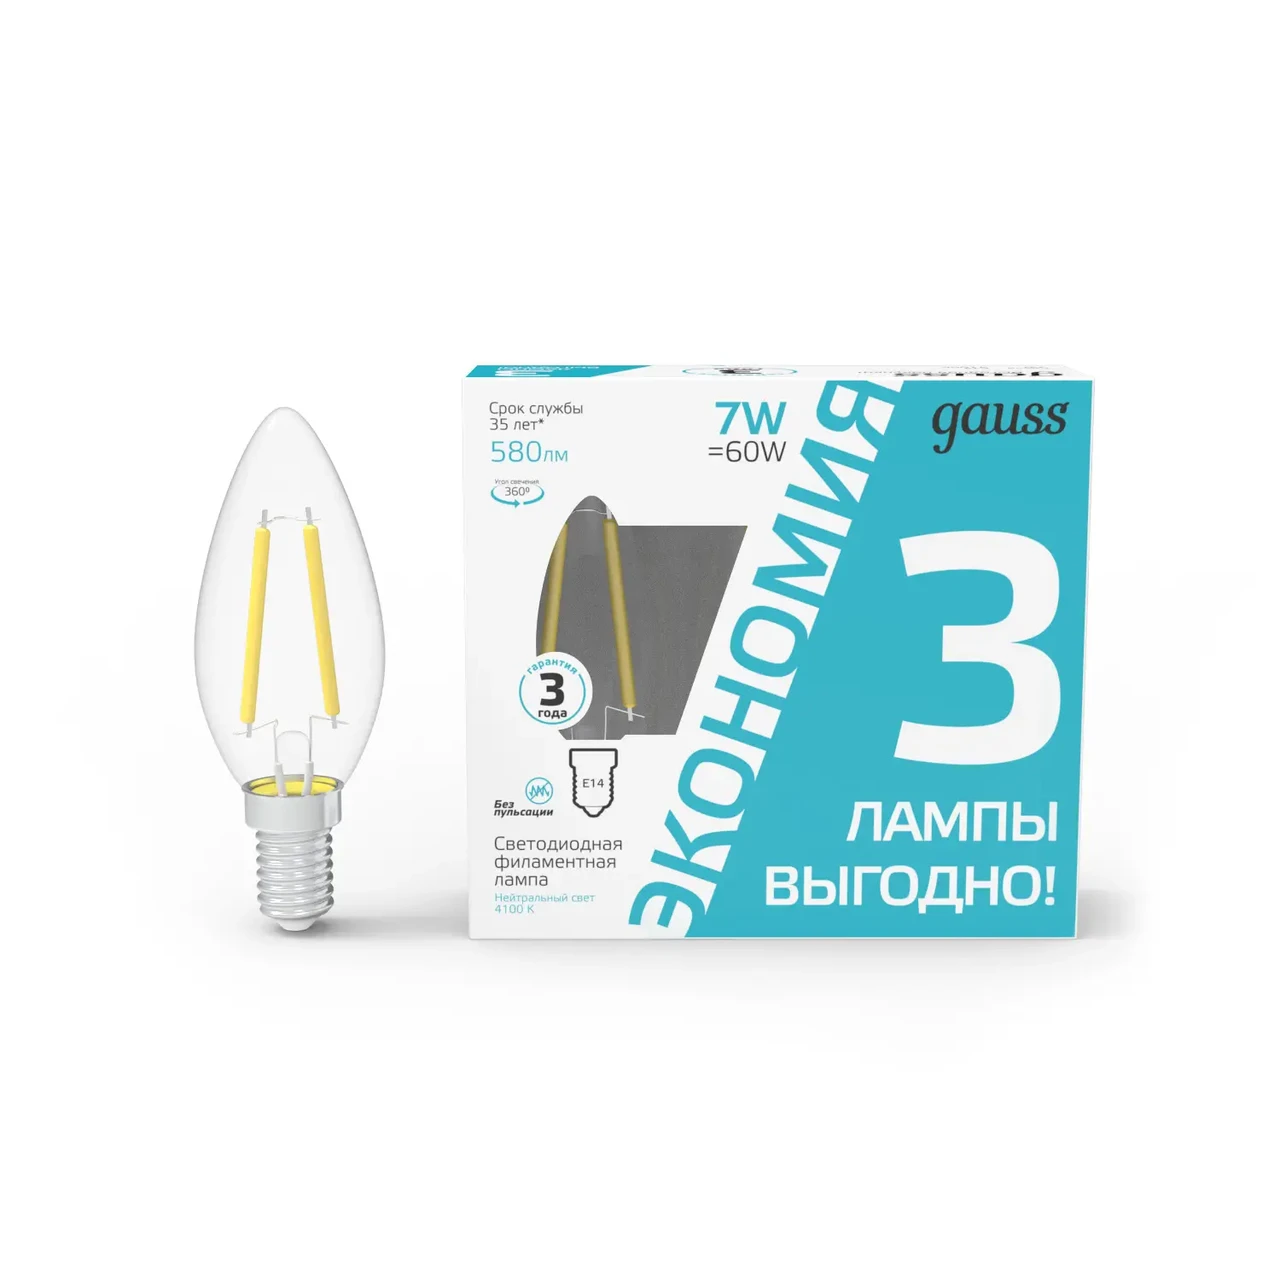 Лампа Gauss Filament Свеча 7W 580lm 4100К Е14 LED (3 лампы в упаковке) 1/20, фото 1